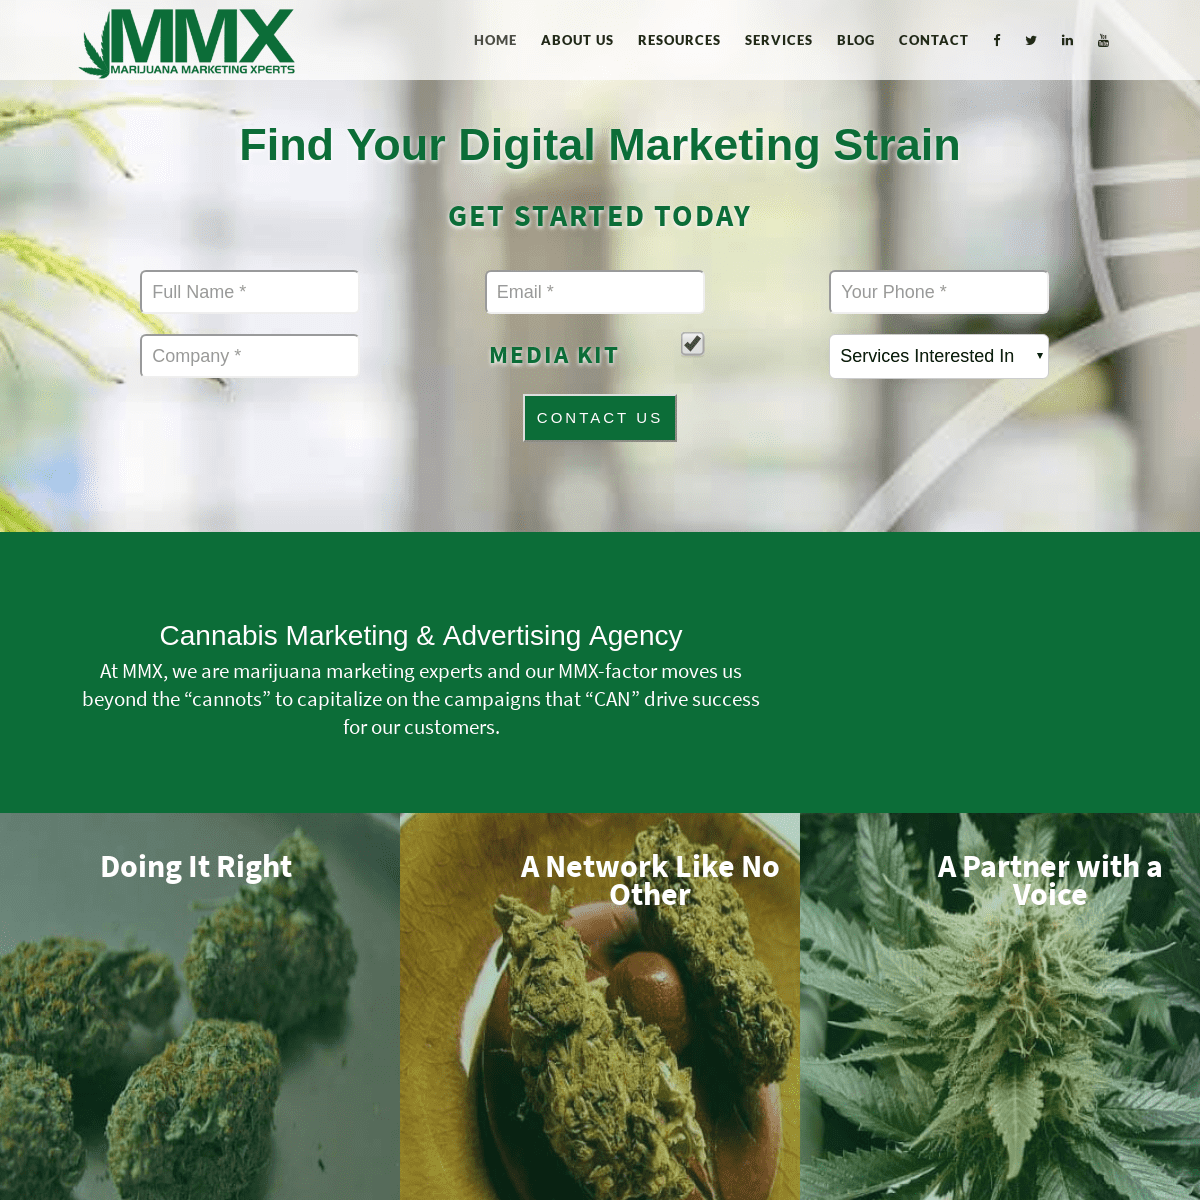 A complete backup of marijuanamarketingxperts.com